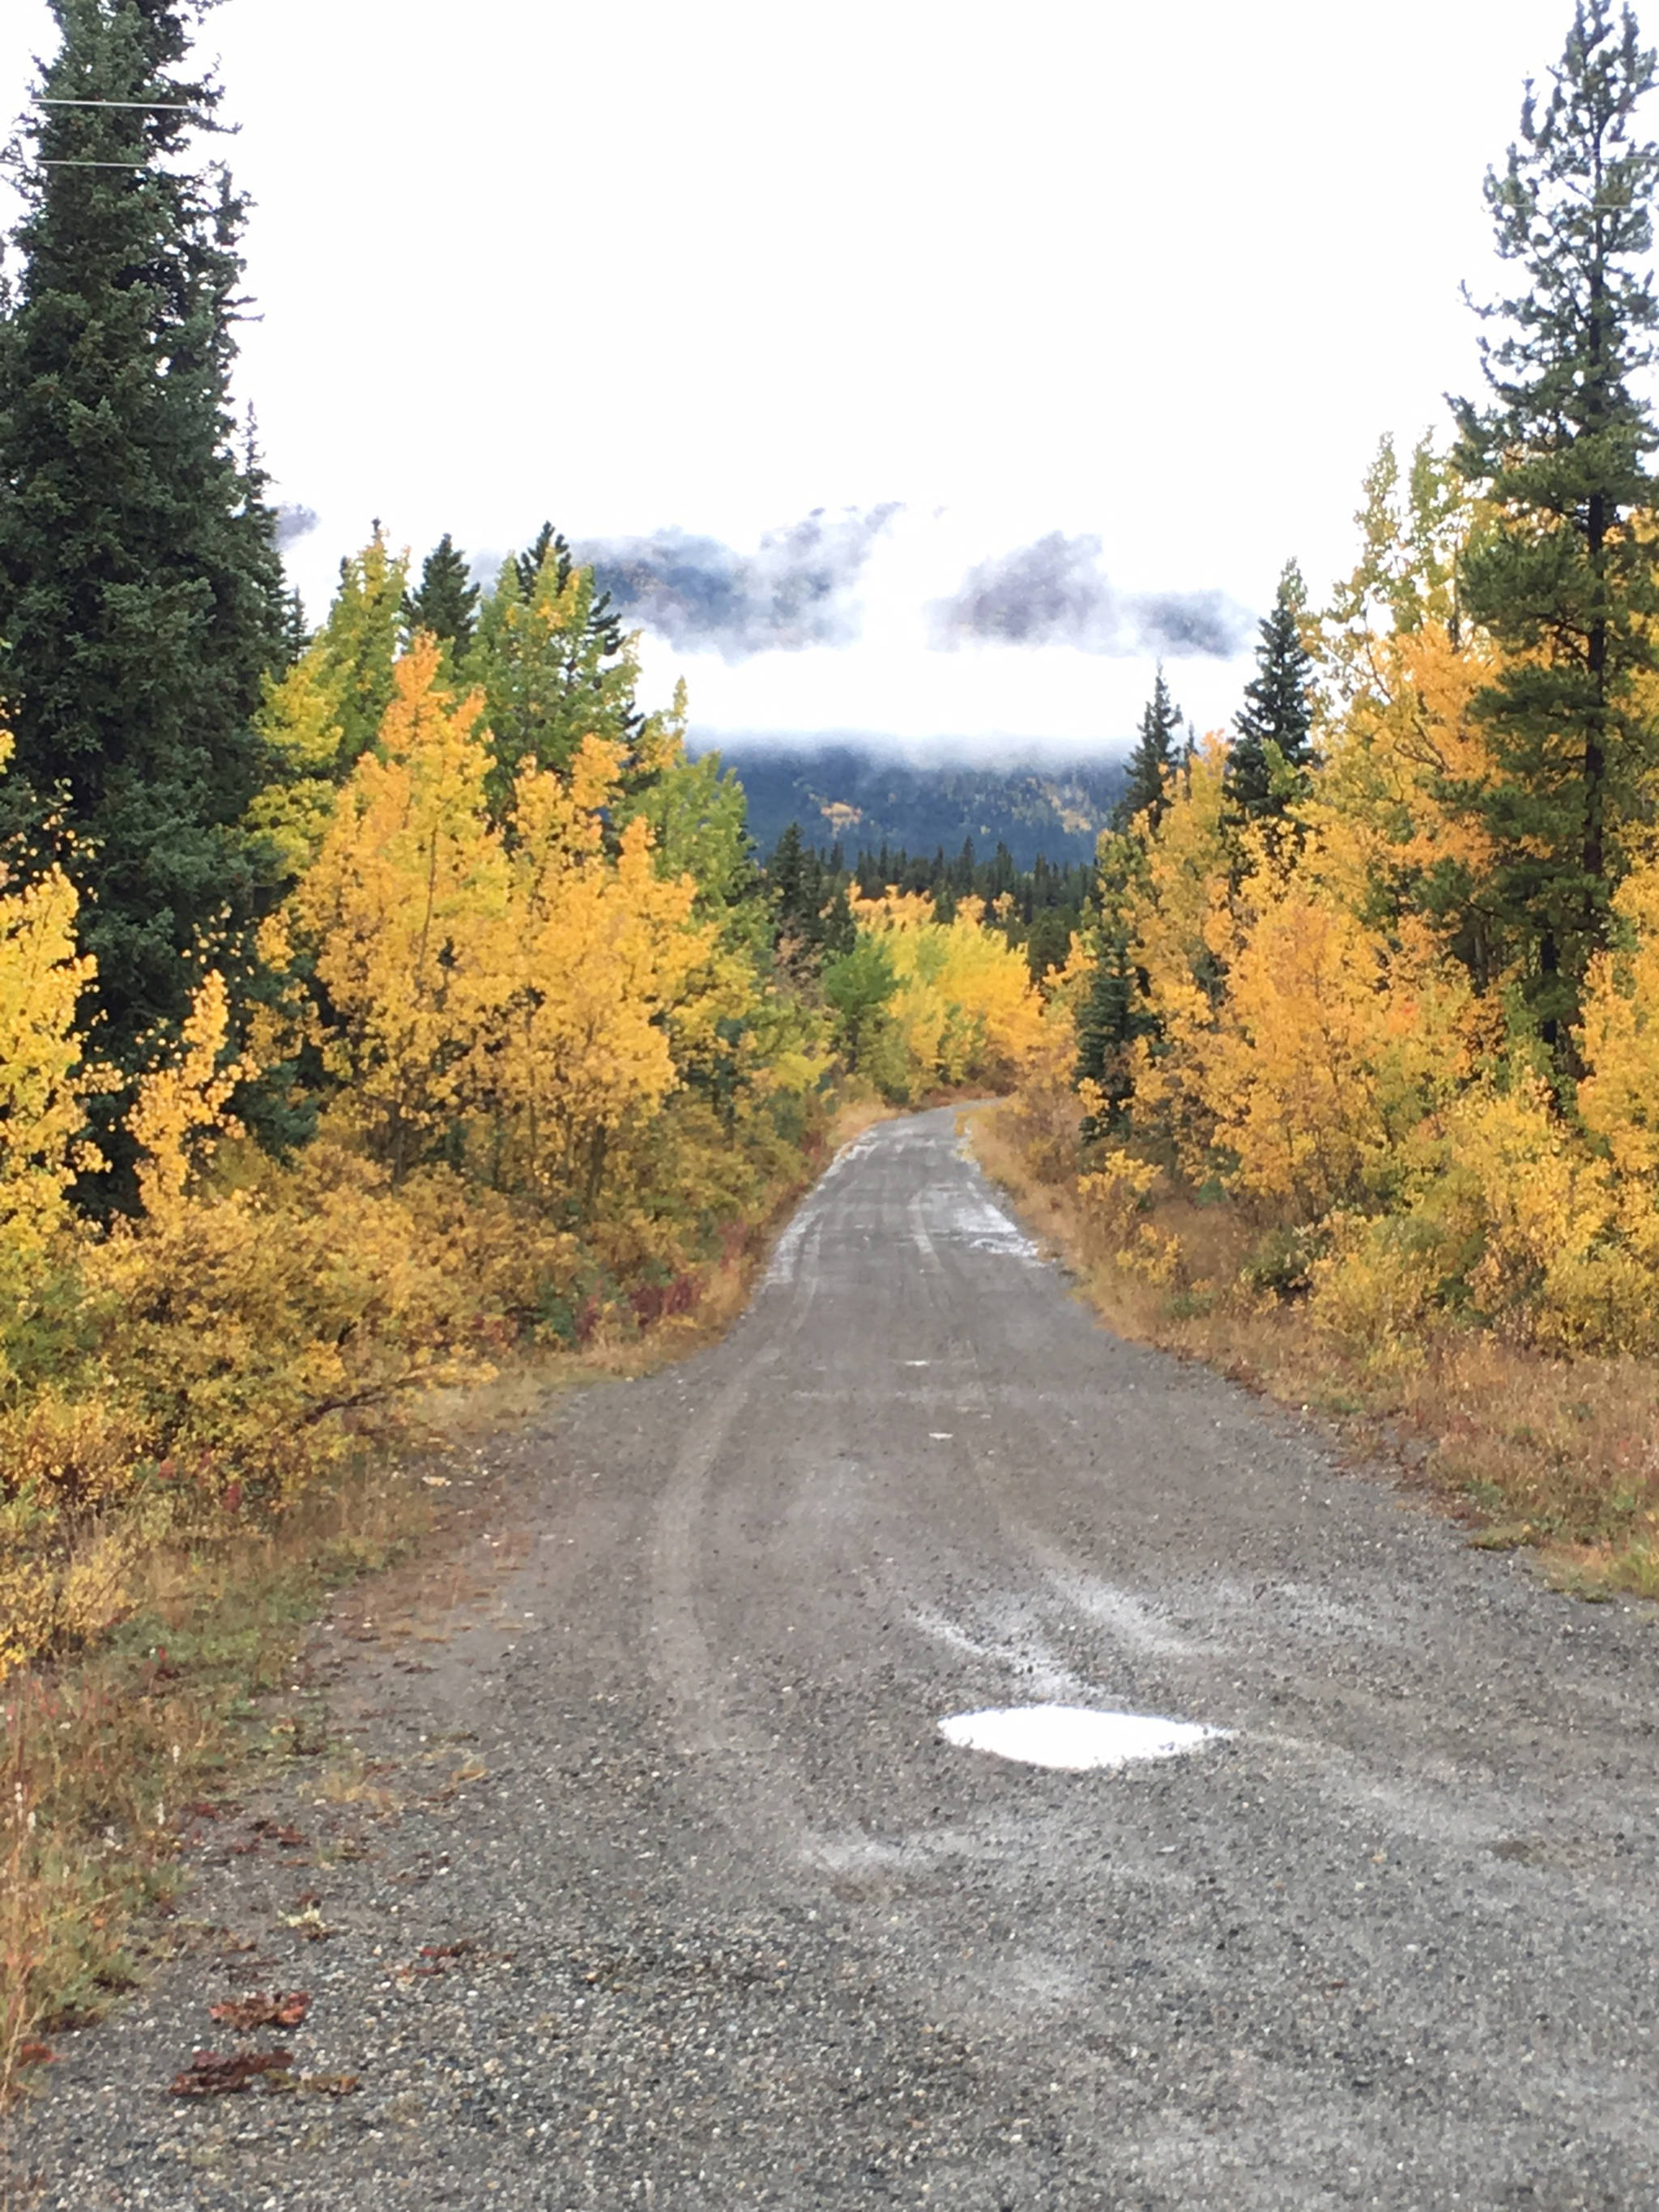 Yukon color along the Klondike Highway. (Photo by Deborah Rudis)